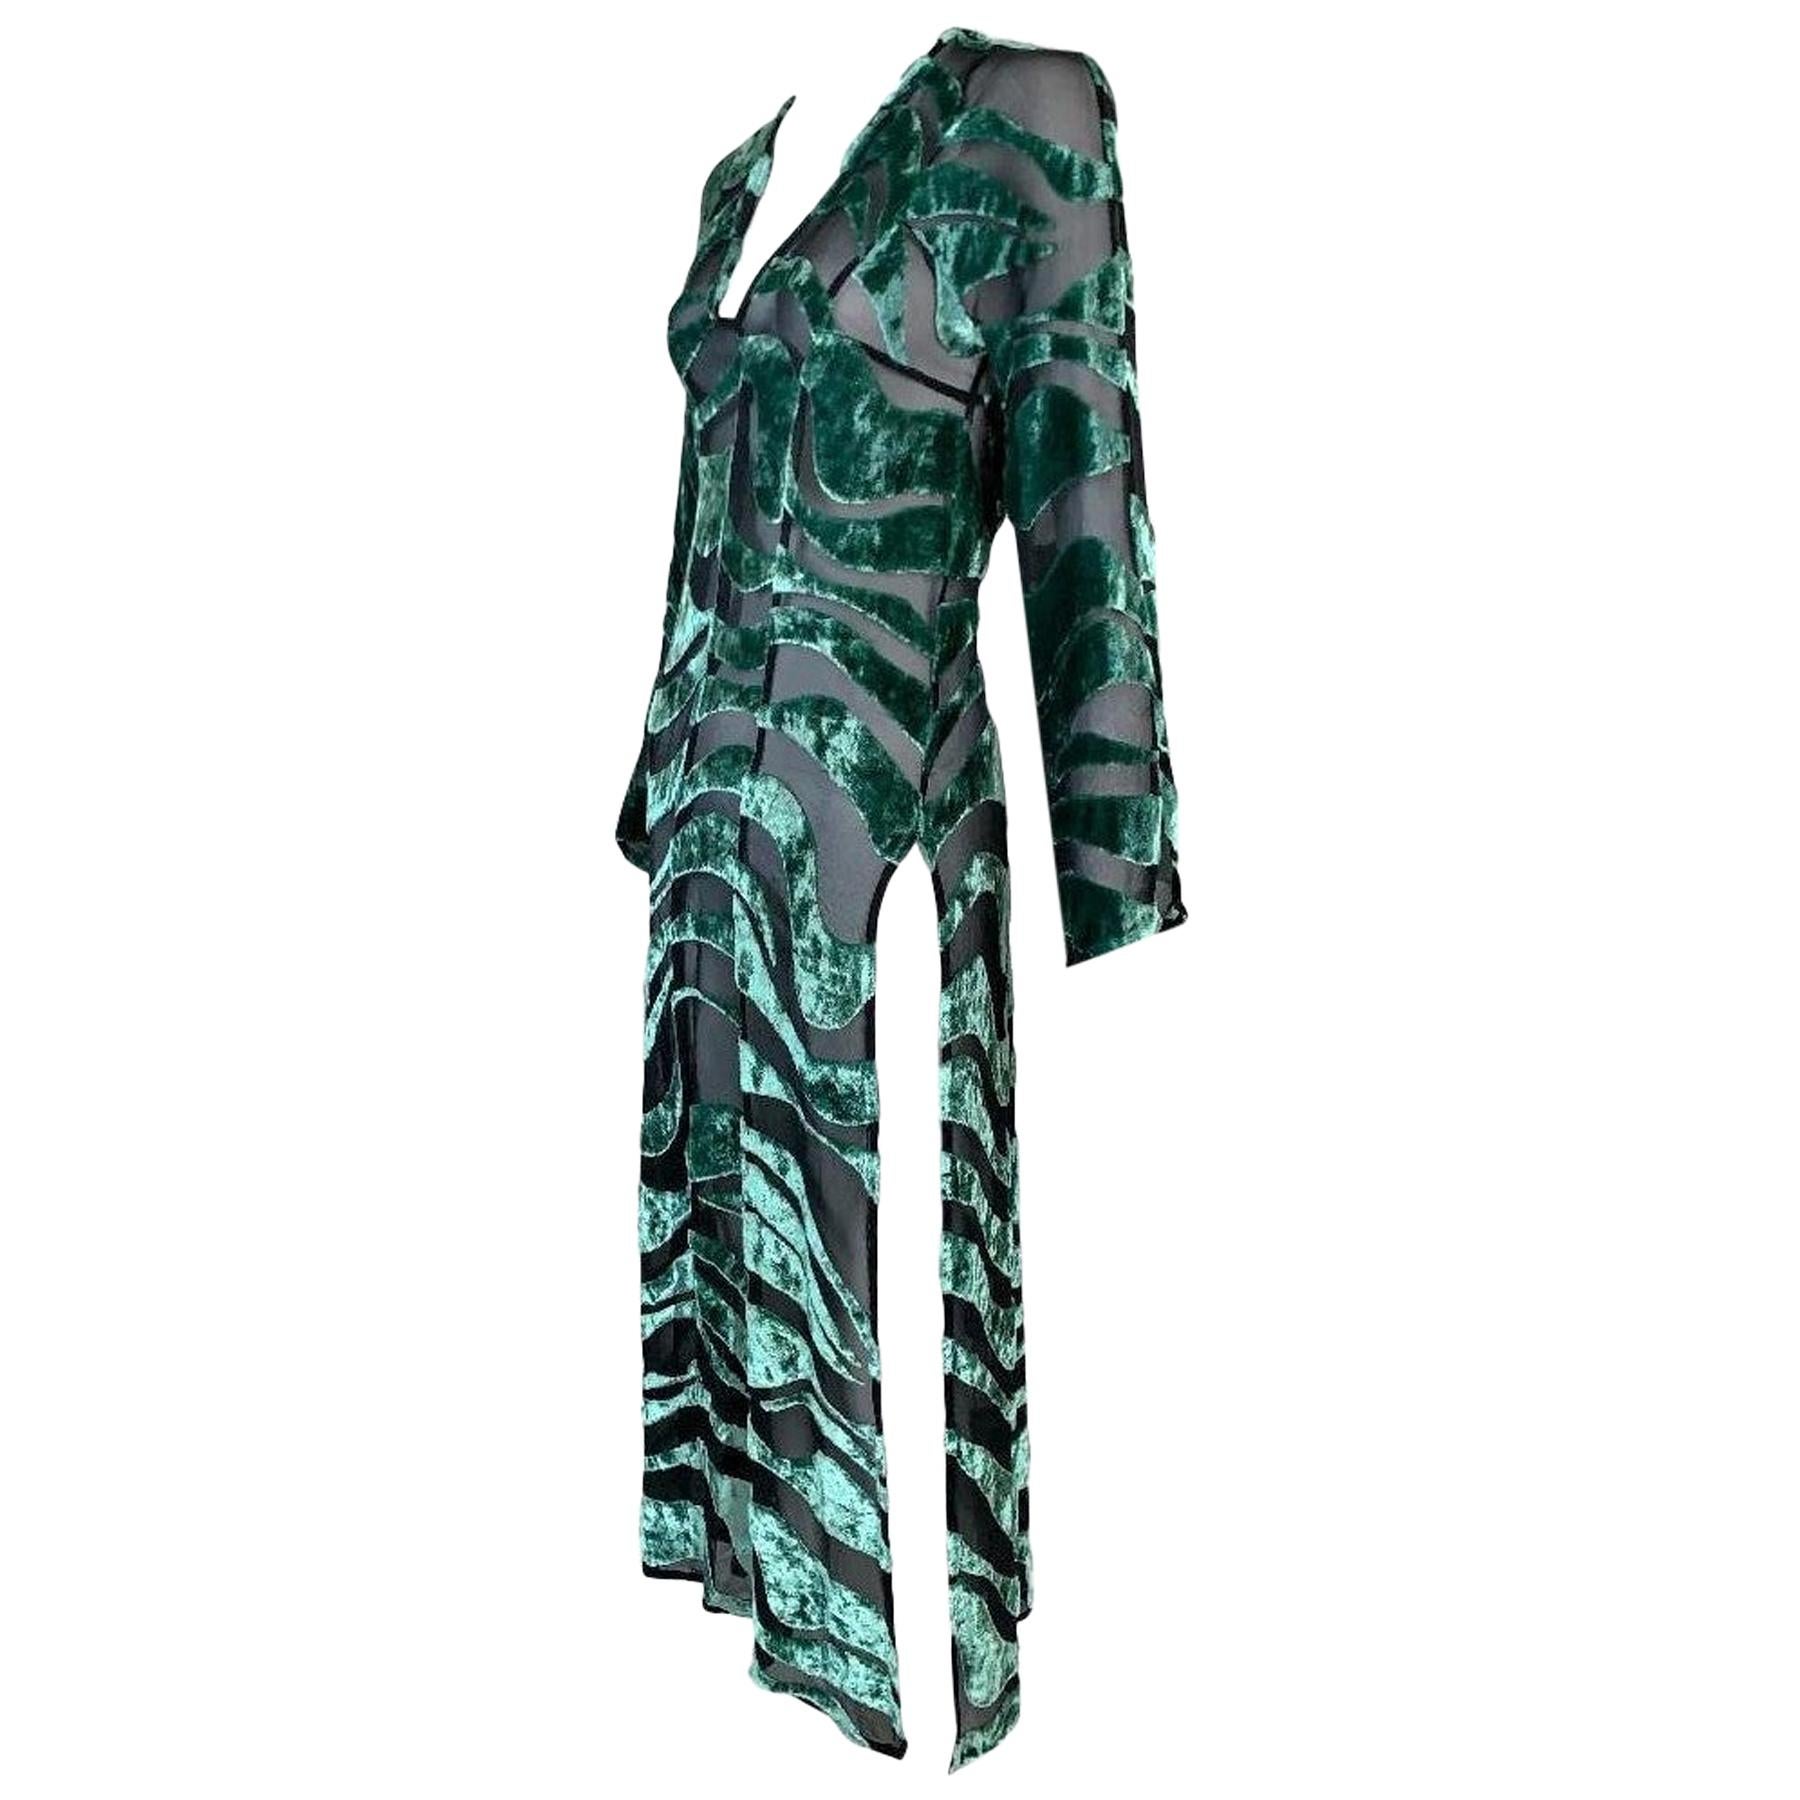 S/S 1996 Gucci by Tom Ford Sheer Black & Green Long Dress